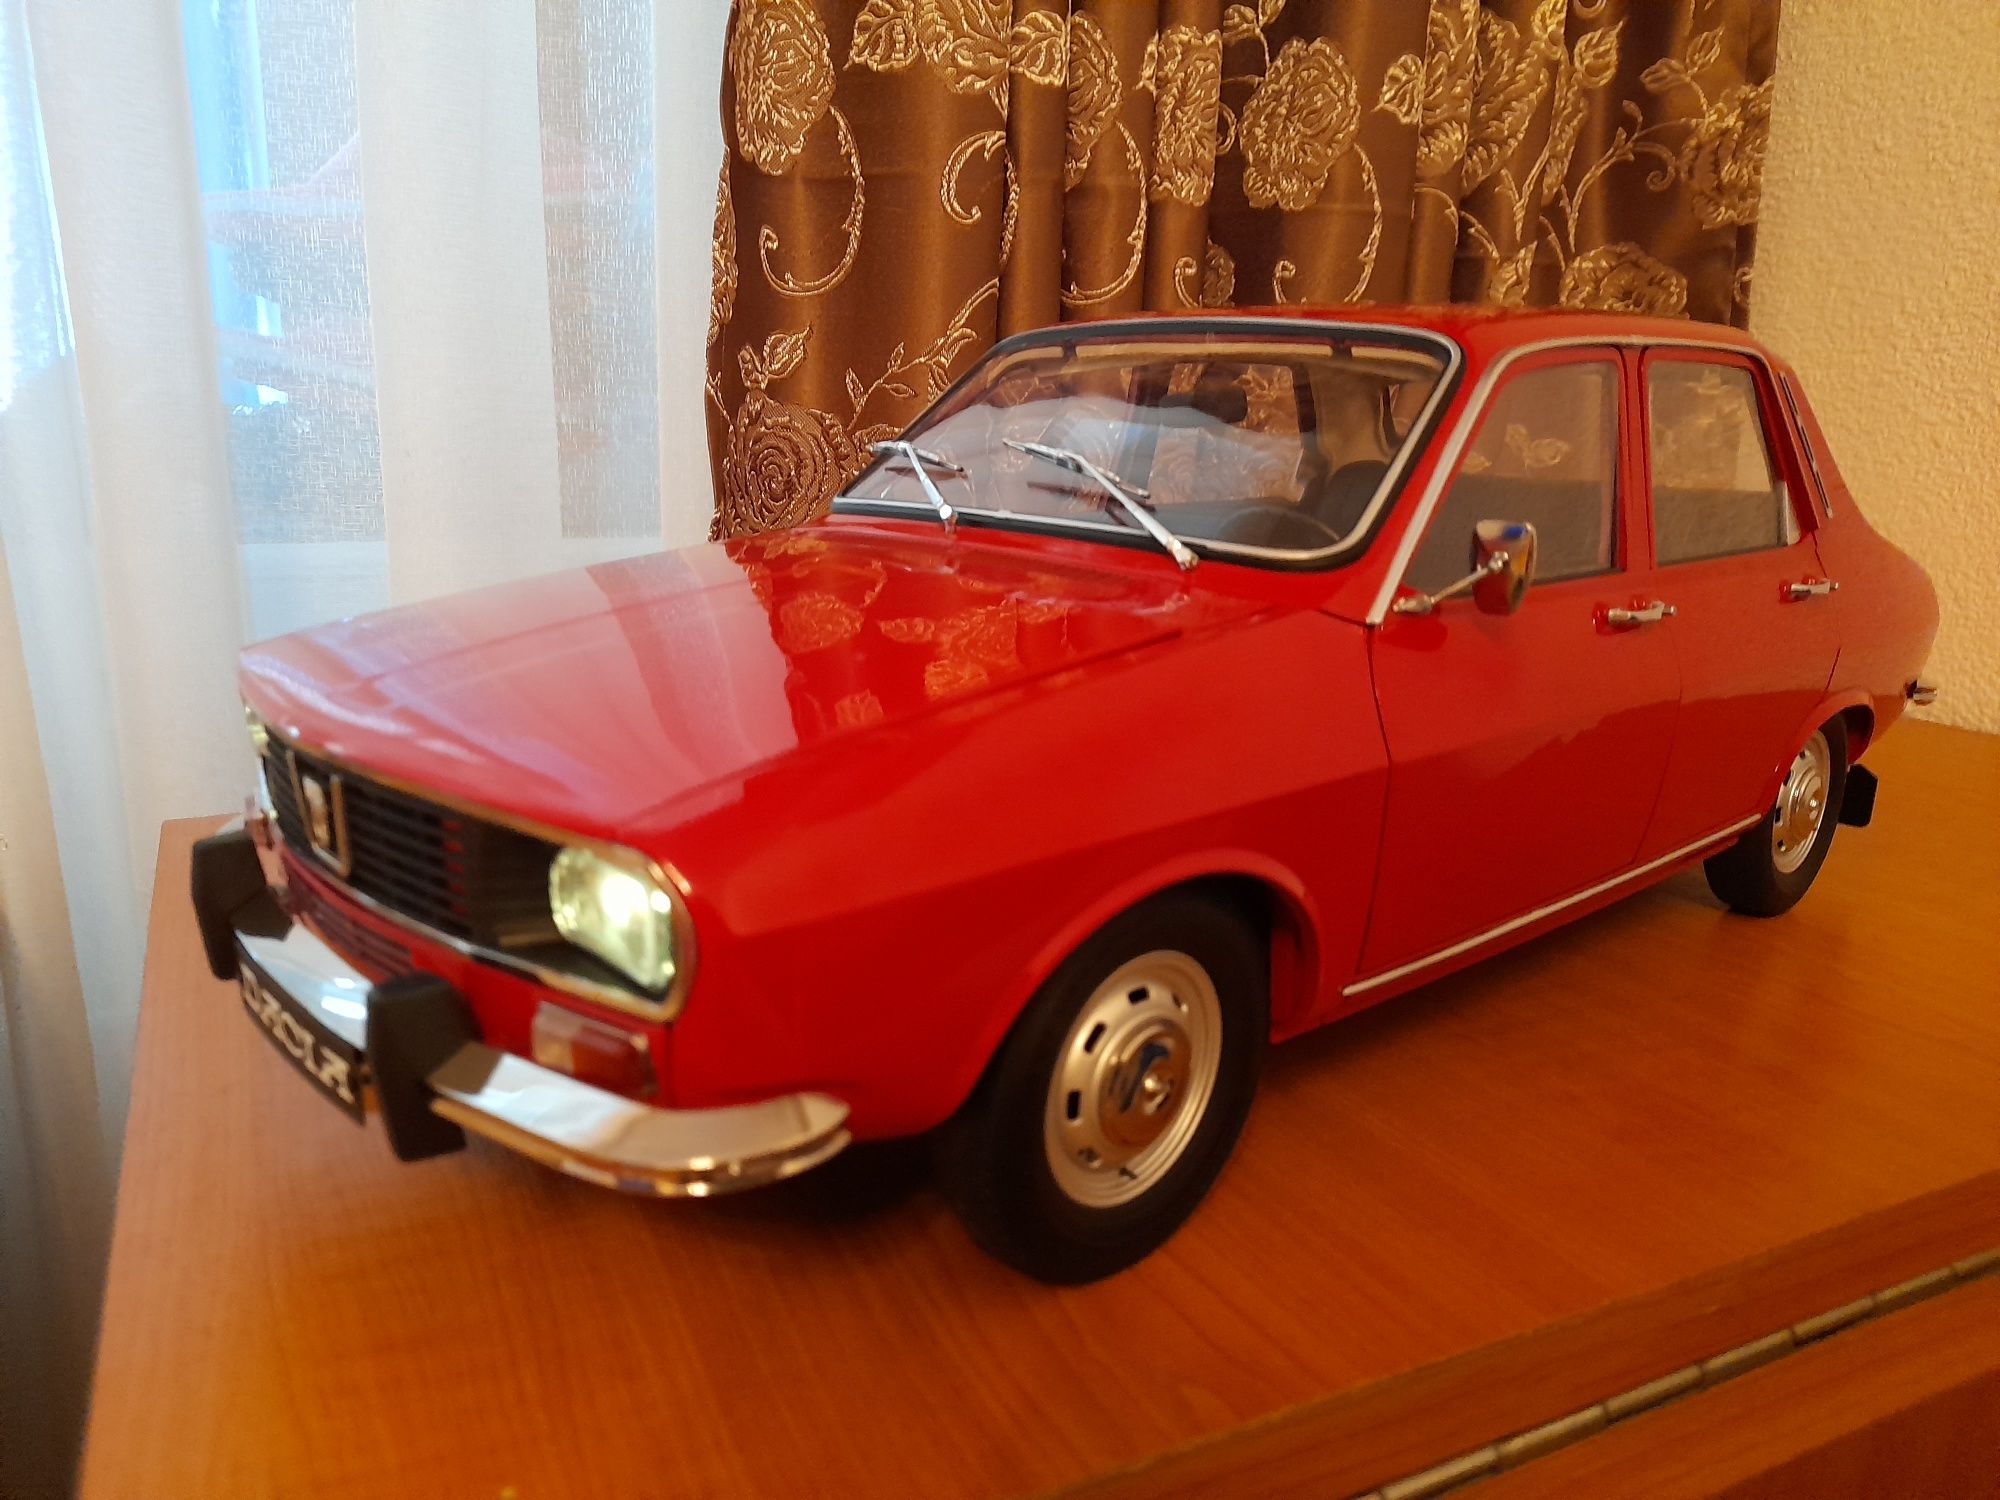 Macheta Dacia 1300, colectia revista de agostini 1/8